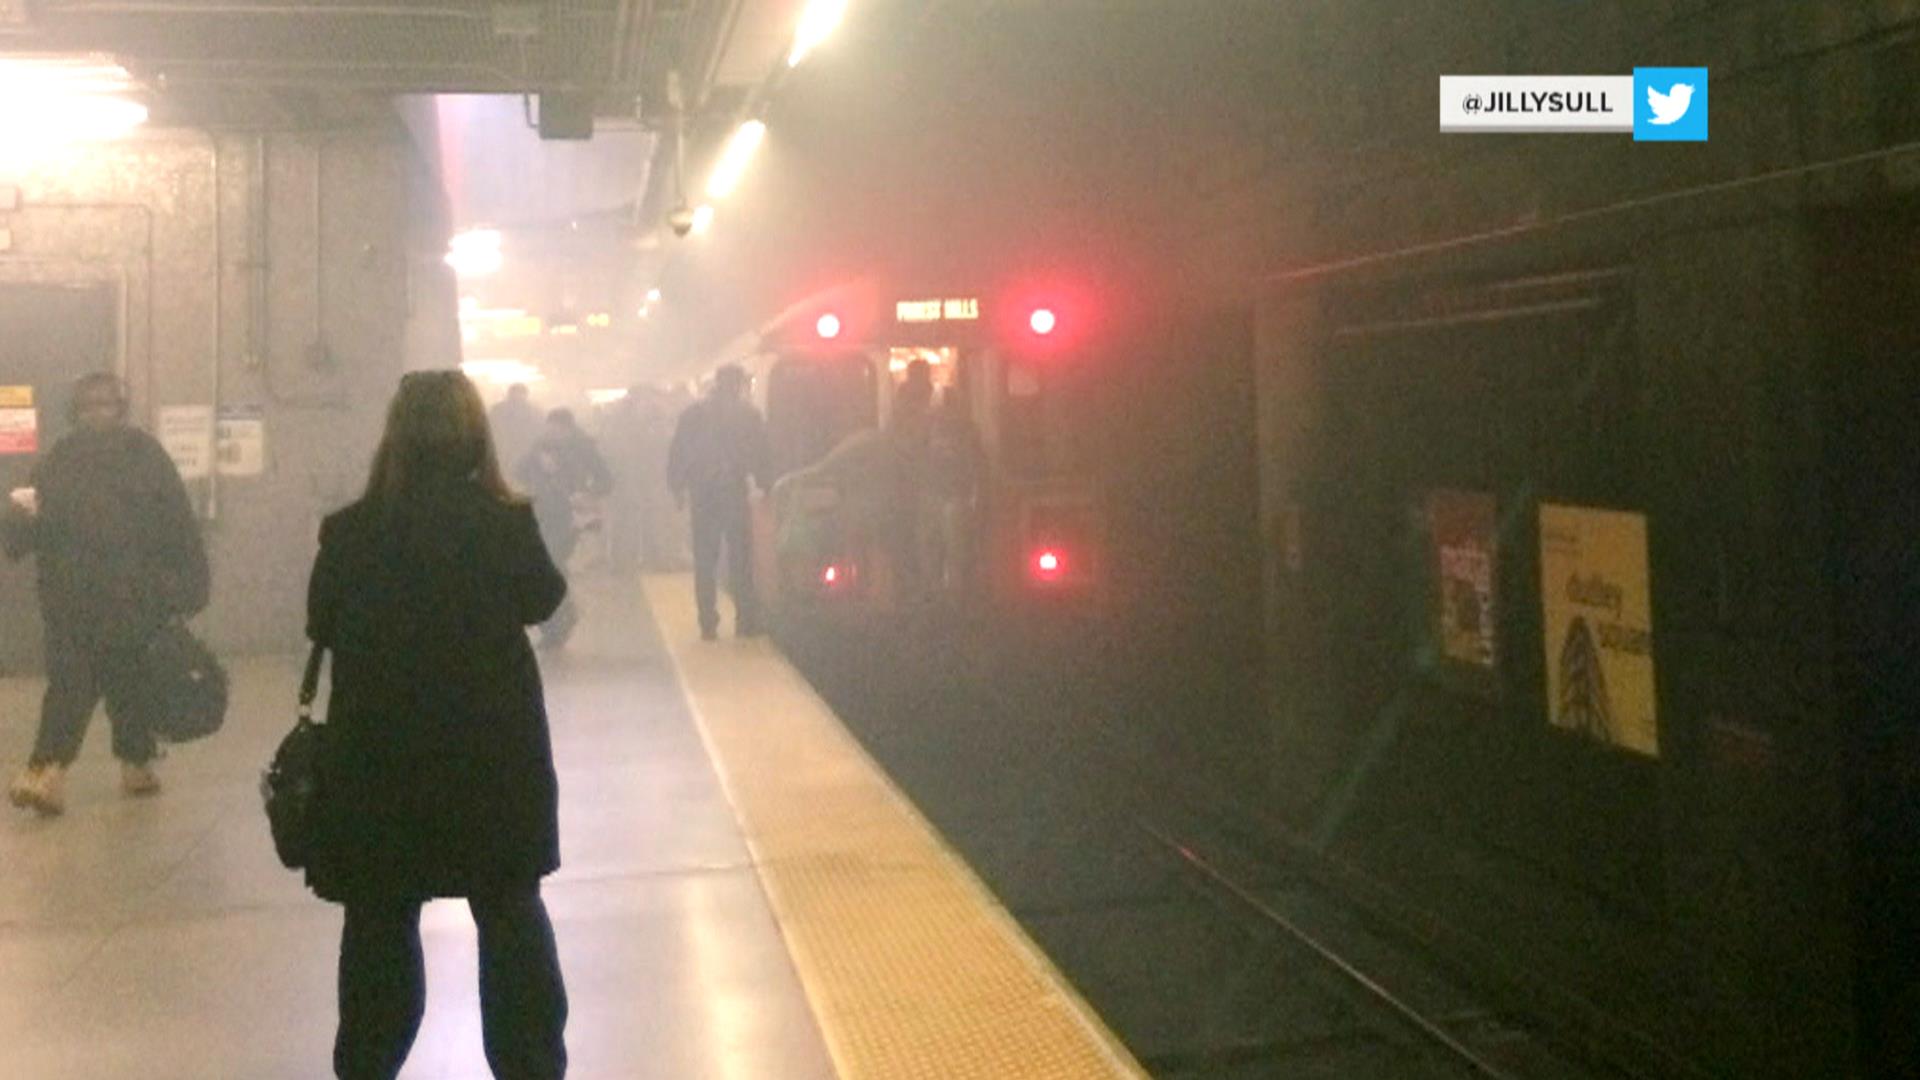 Boston subway train fills with smoke; commuter describes smashing window to escape